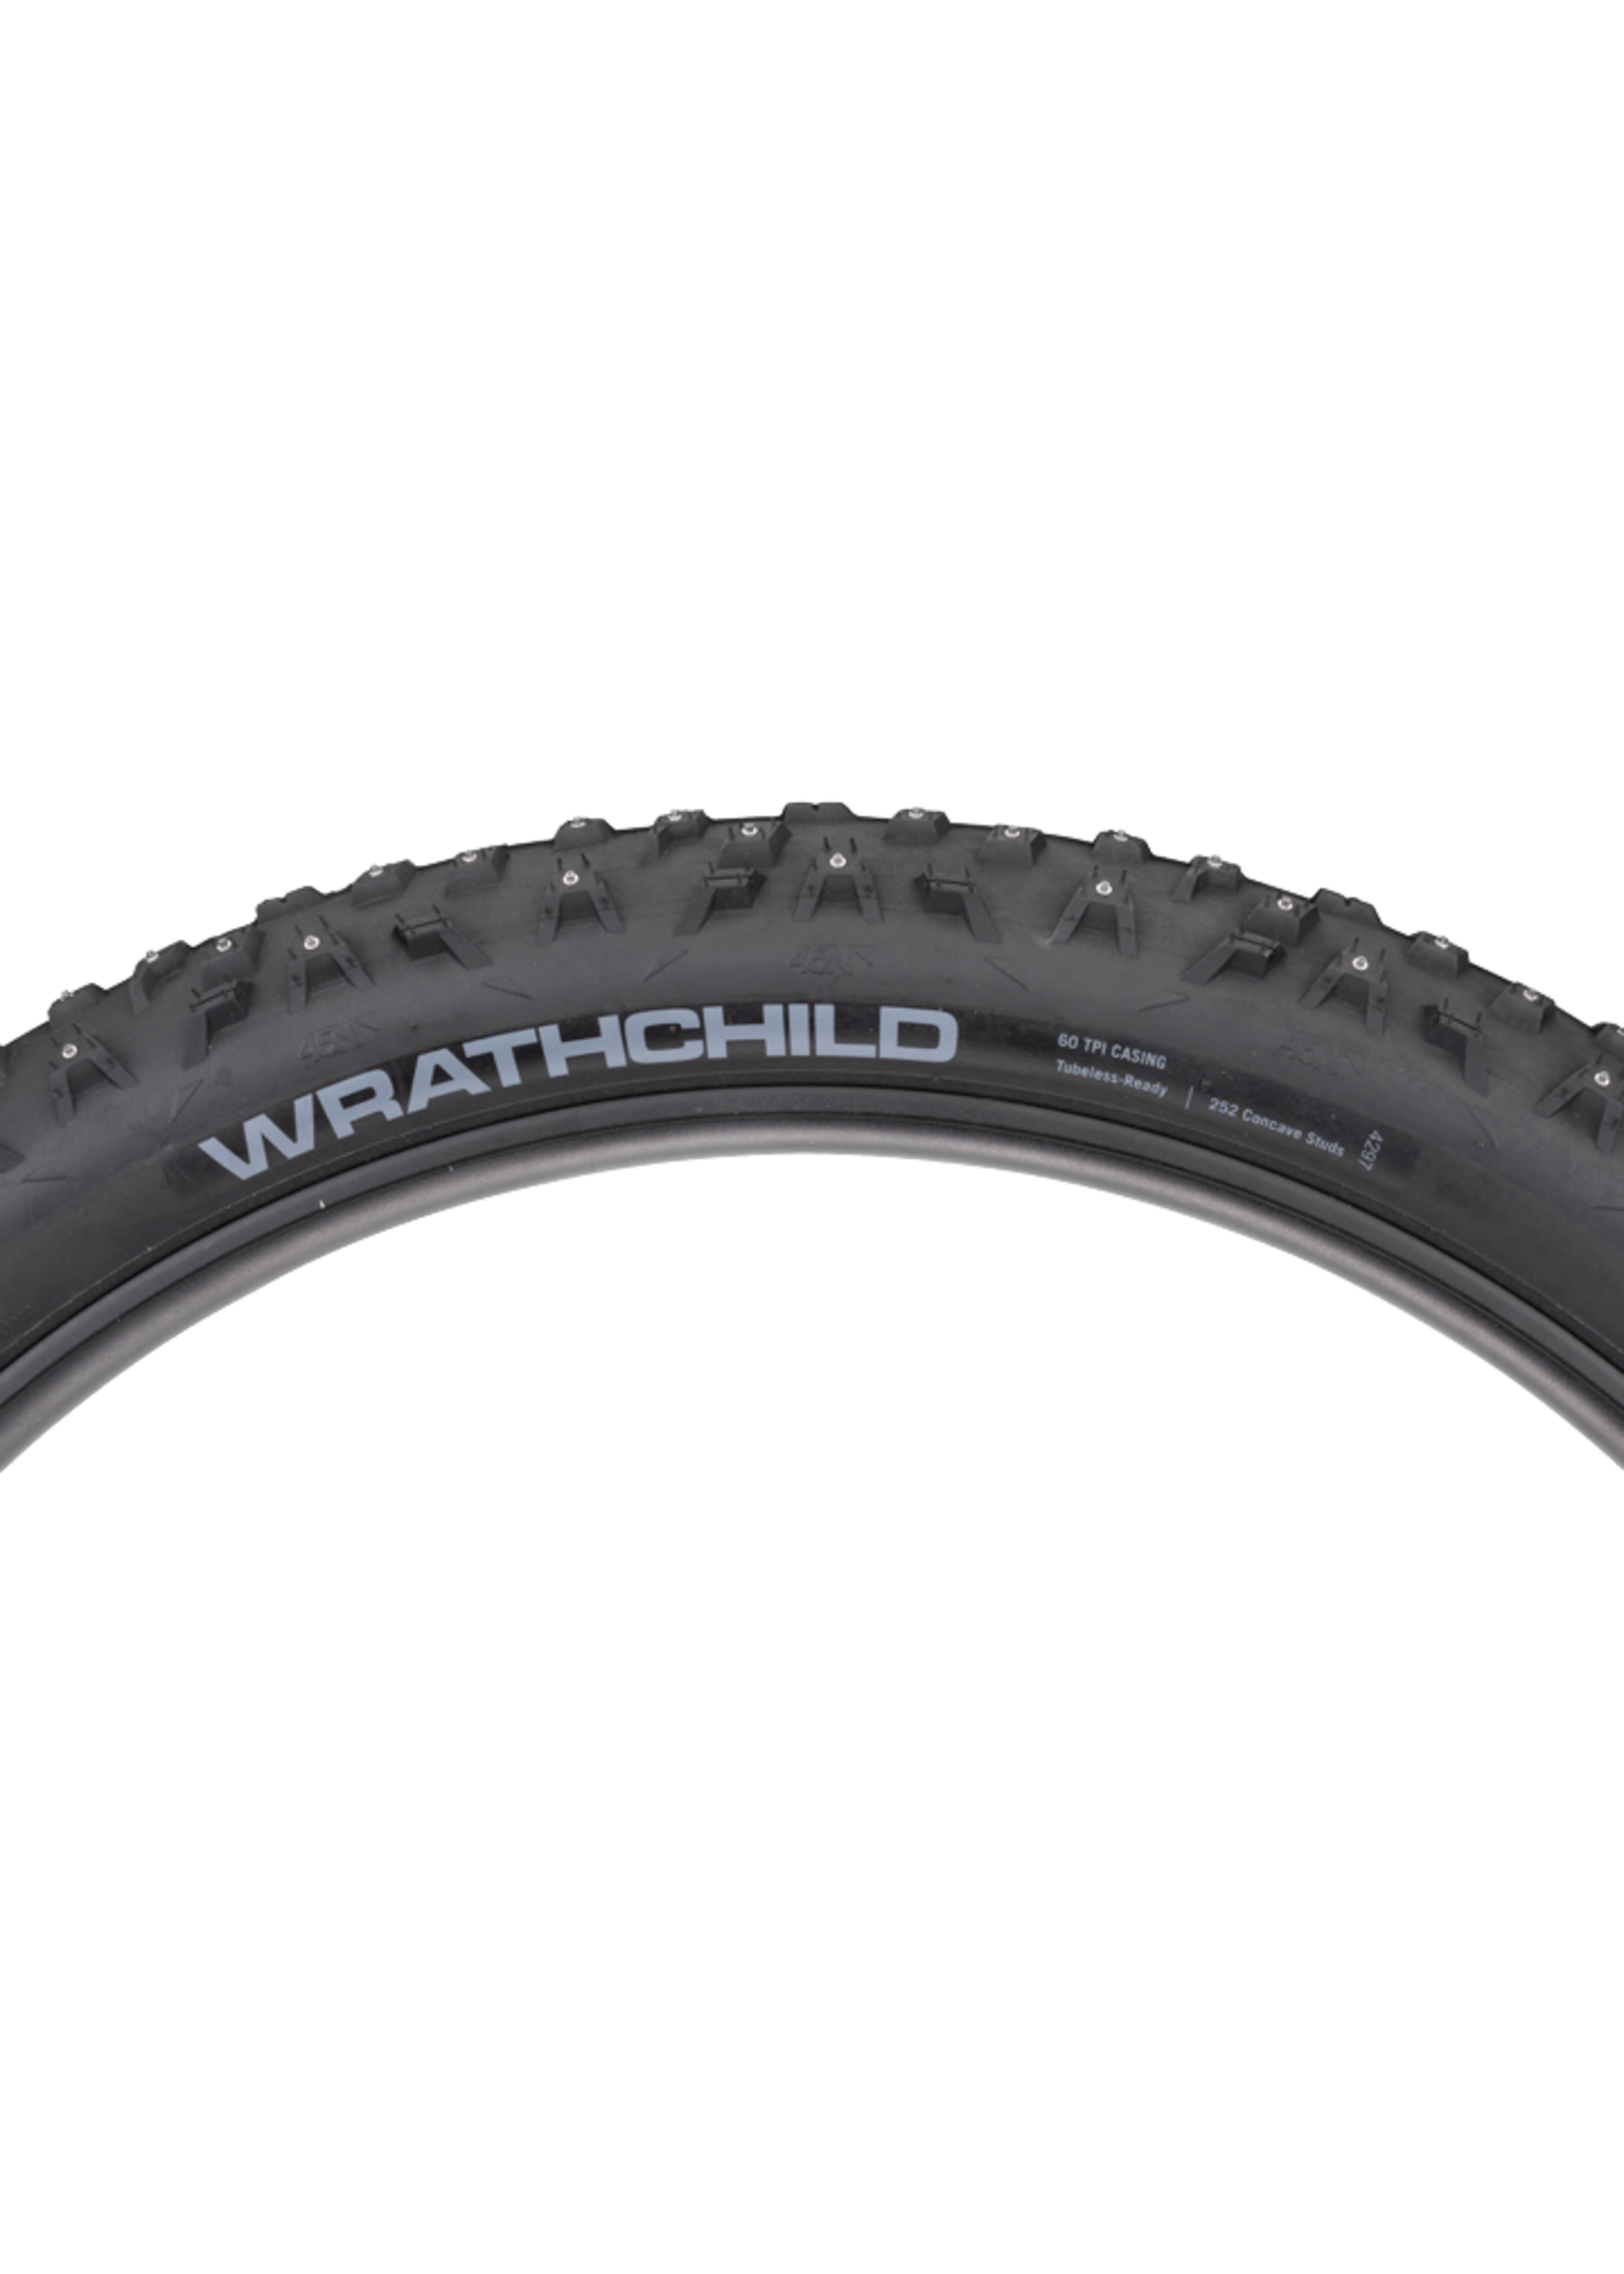 45NRTH 45NRTH Wrathchild Tire Tubeless Folding Concave Carbide Studs BLACK